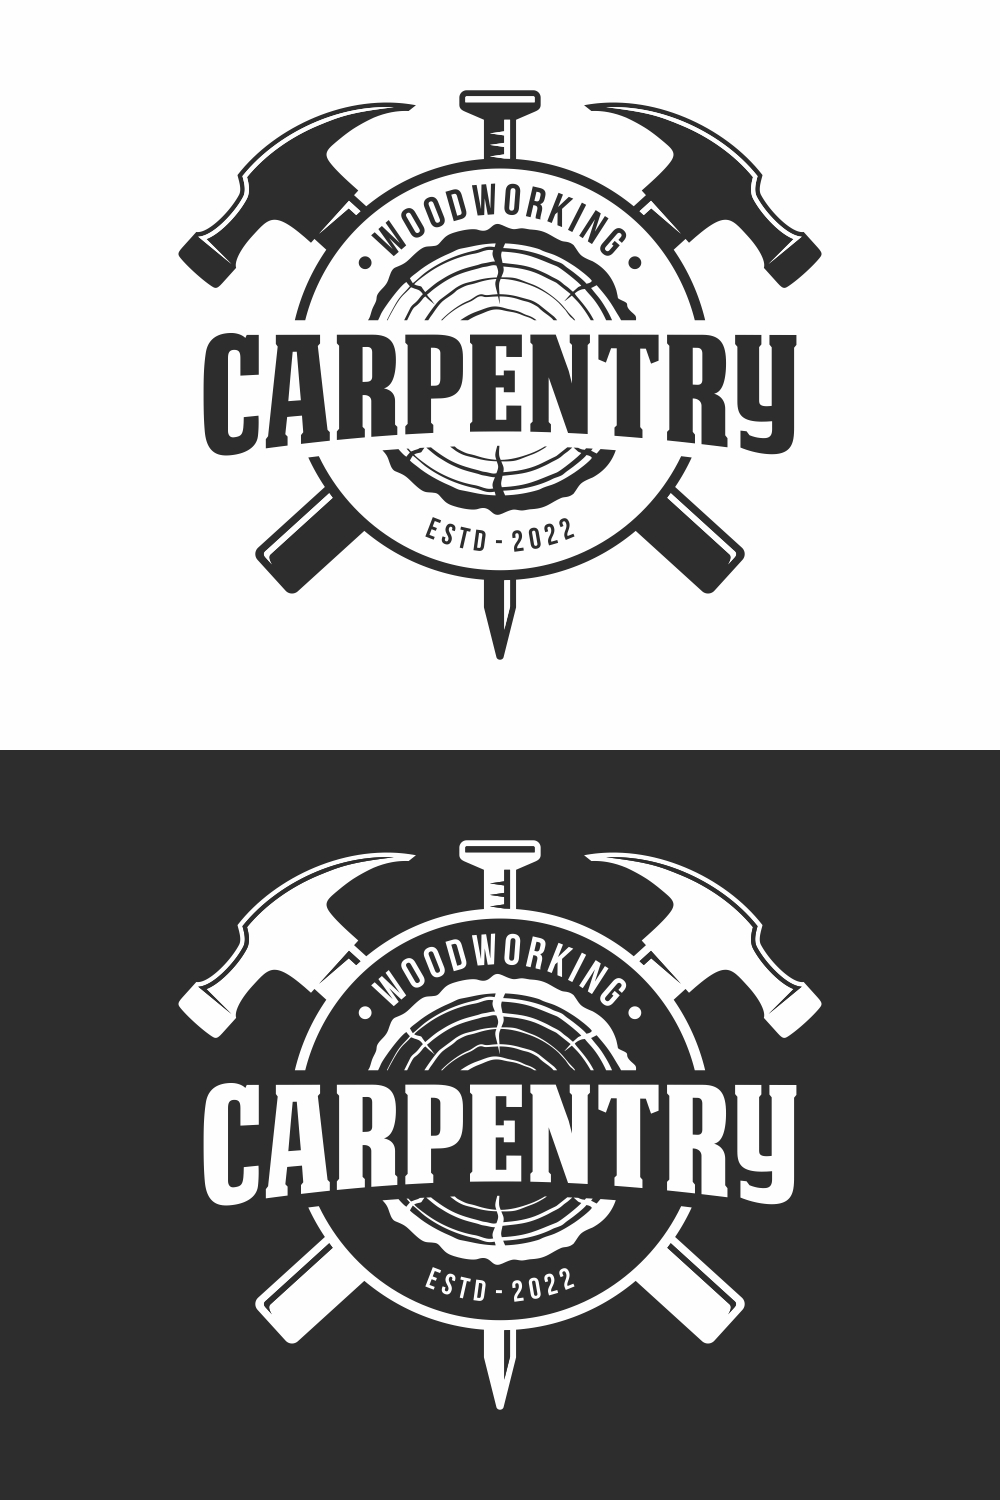 Carpentry Vintage Logo Design Template – Only $6 pinterest preview image.